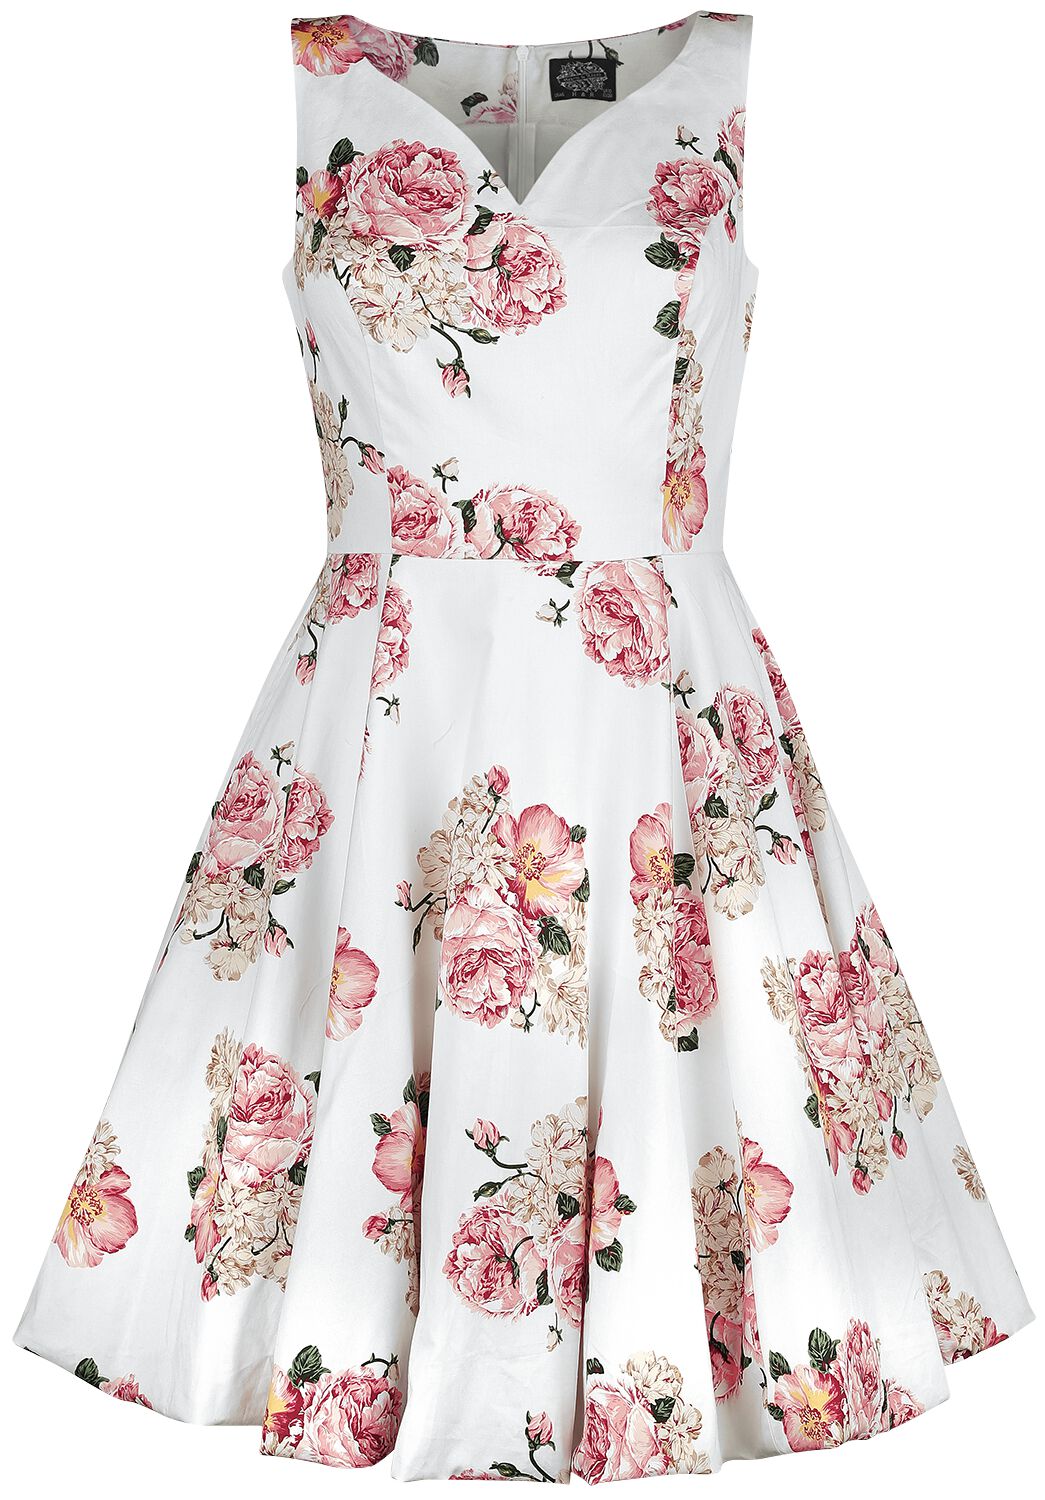 H&R London - Rockabilly Kleid knielang - Taraneh Swing Dress - XS bis 6XL - für Damen - Größe XL - weiß/rosa